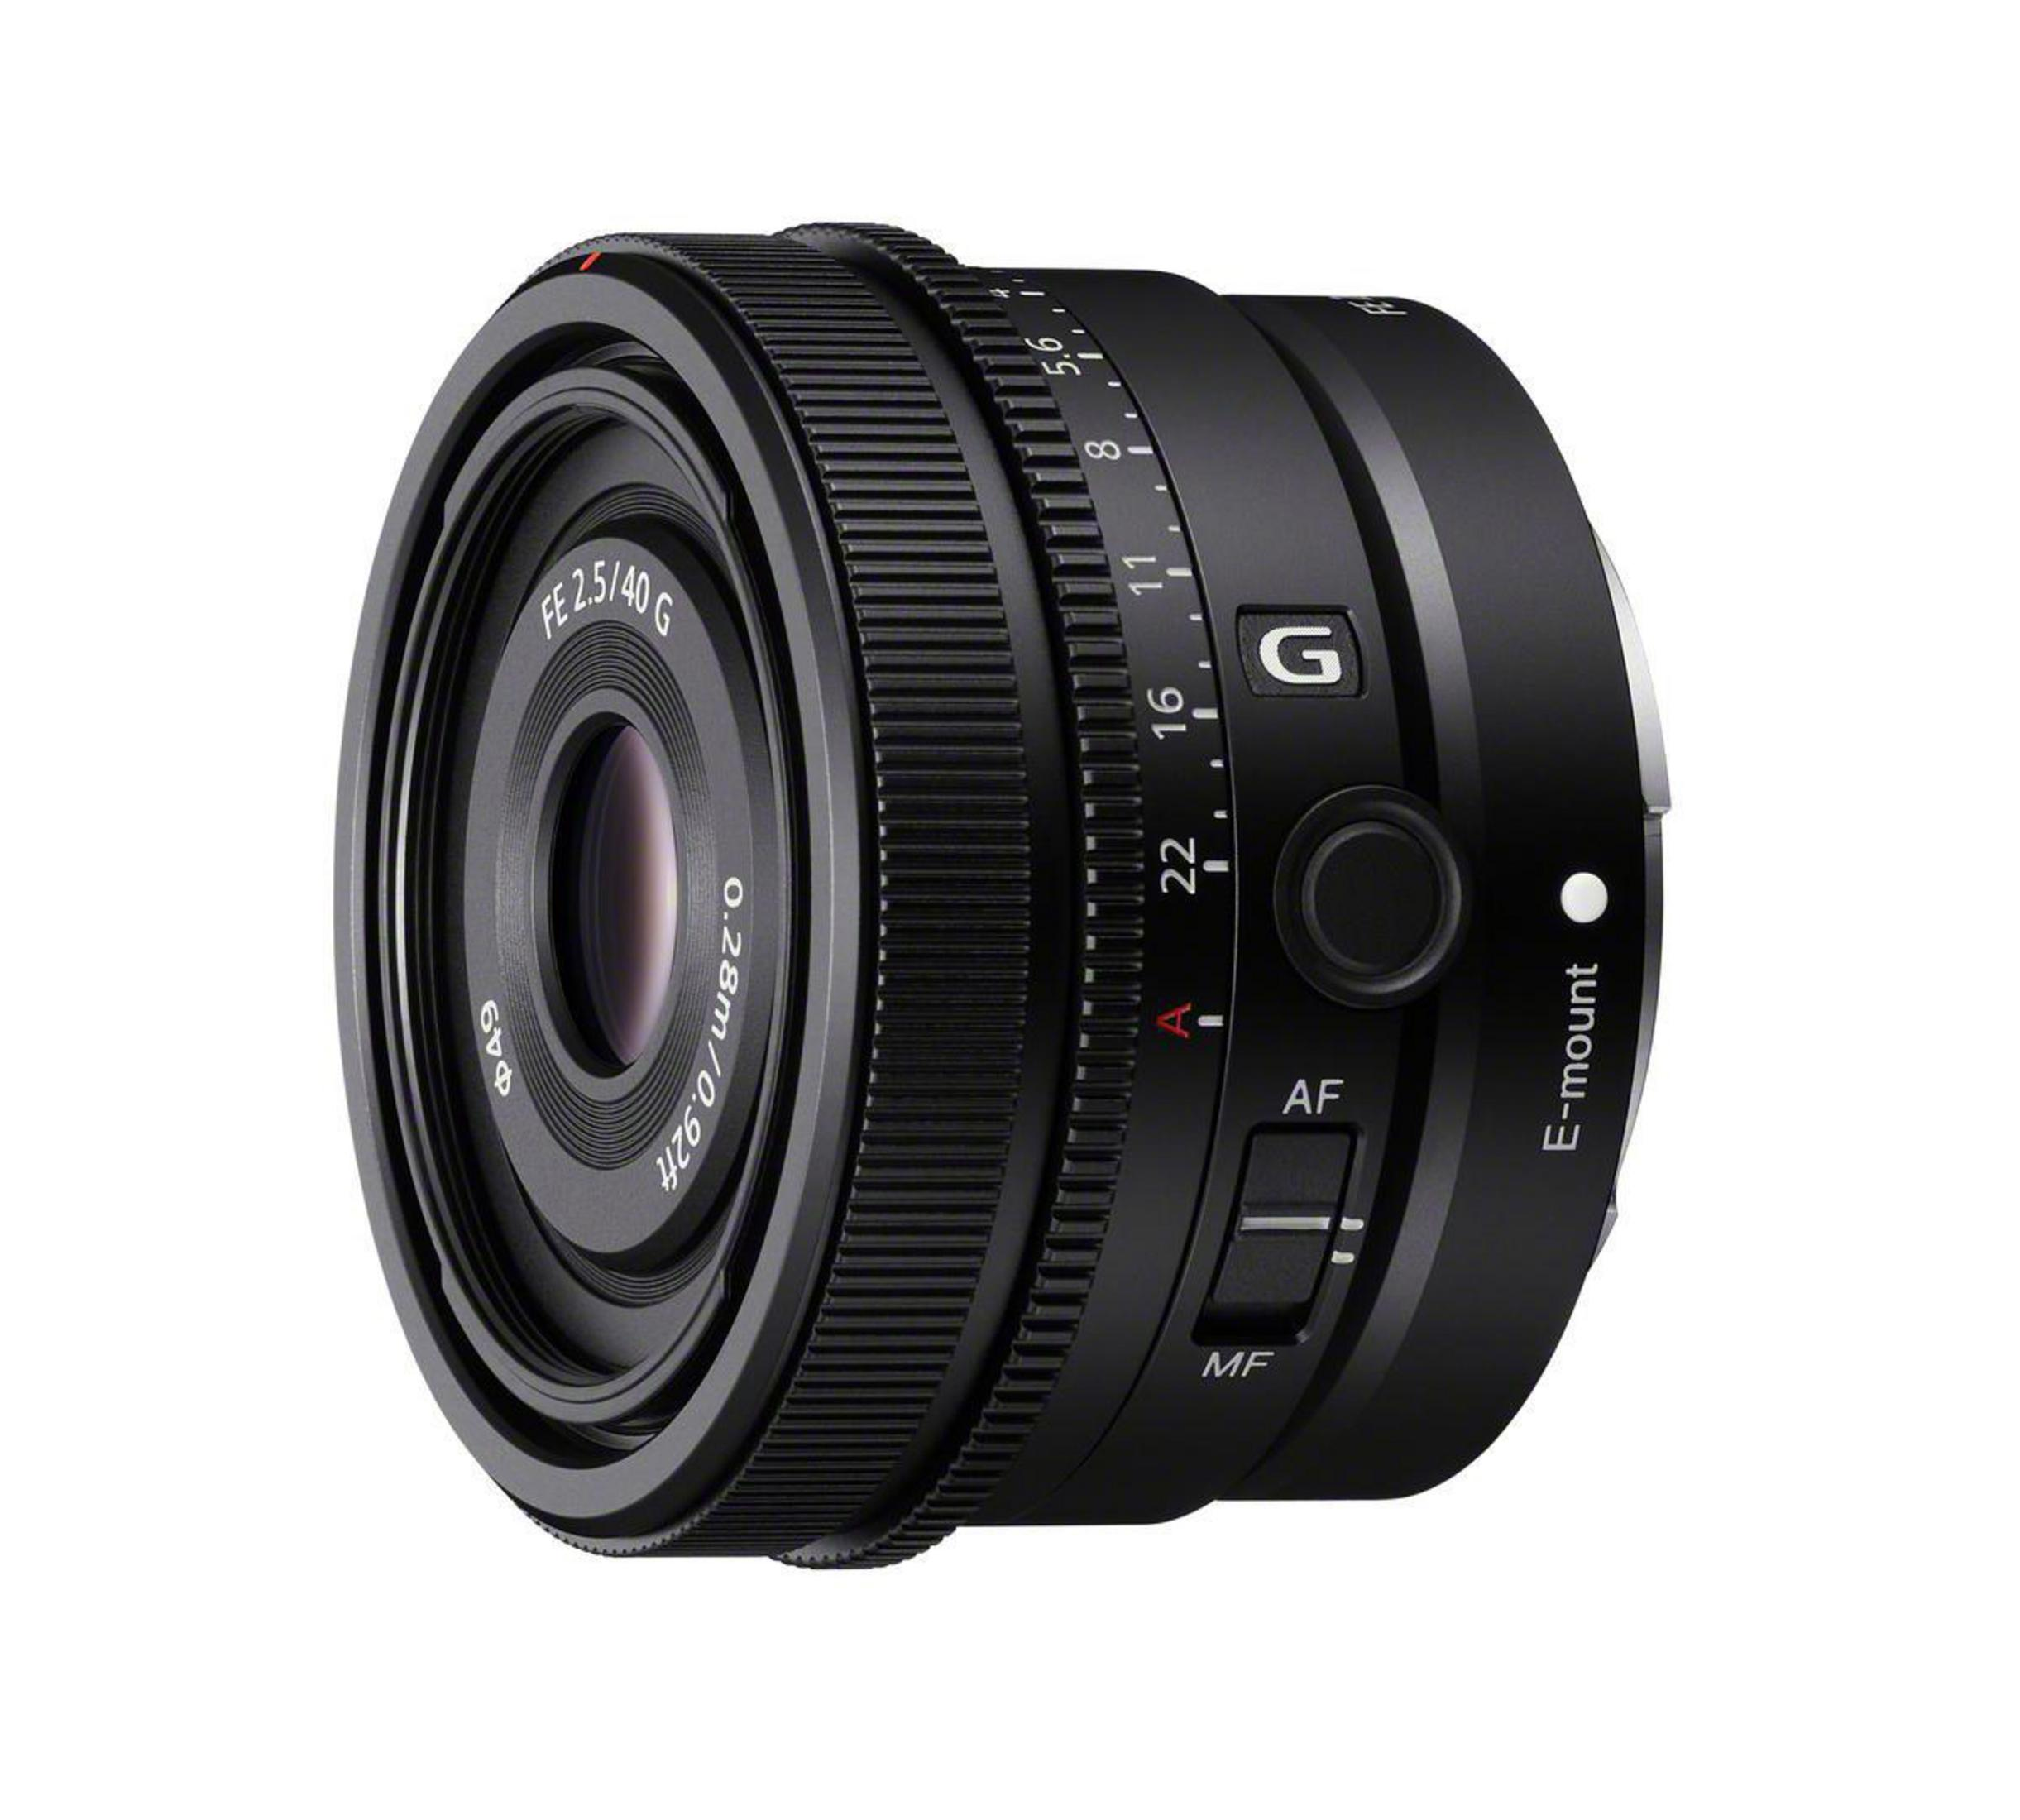 SONY SEL 40 F25G 40 Schwarz) - E-Mount, Circulare f/2.5 (Objektiv mm Sony 40 mm Blende, G-Lens, DMR für FHB, IF